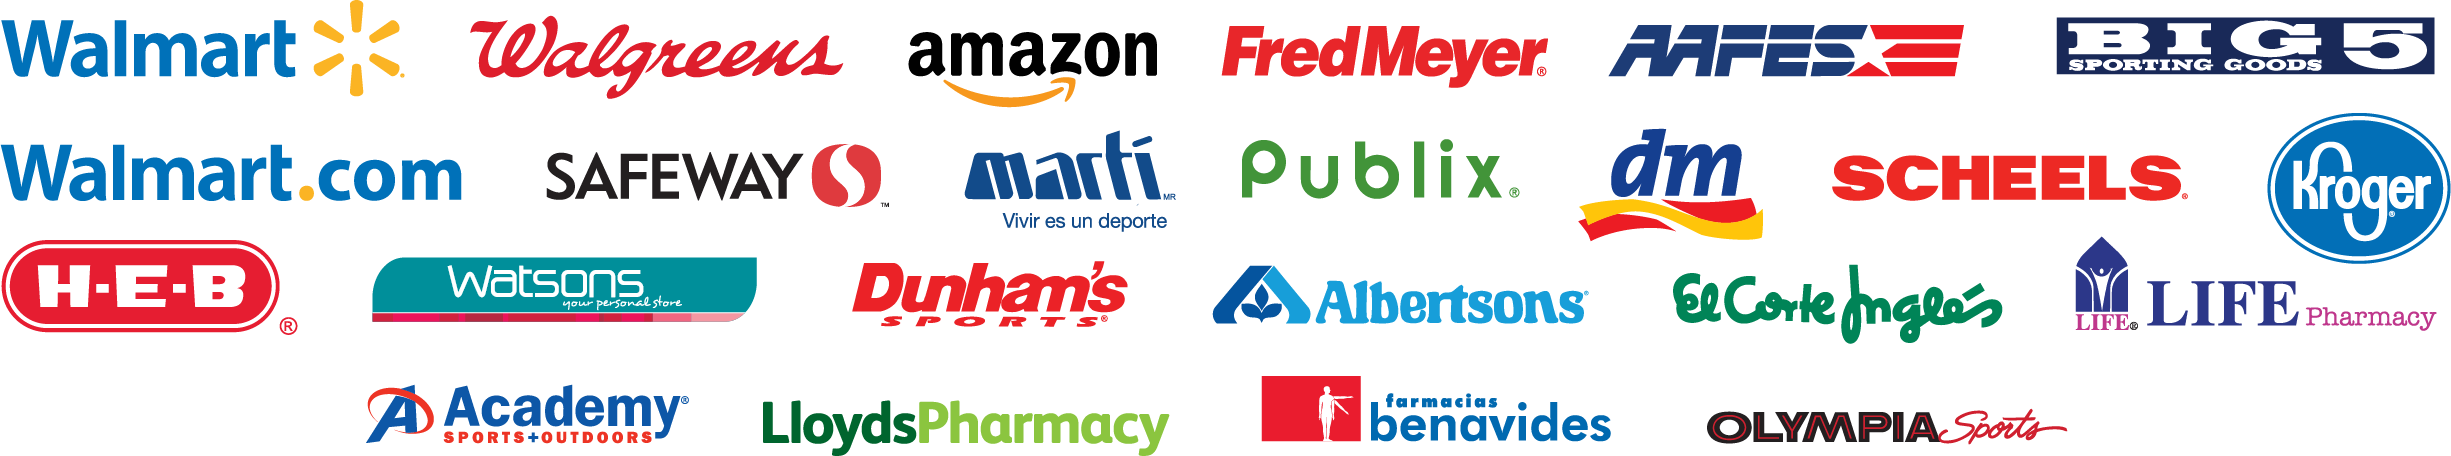 Retailer logos, including Walmart, Walgreens, Amazon, and more